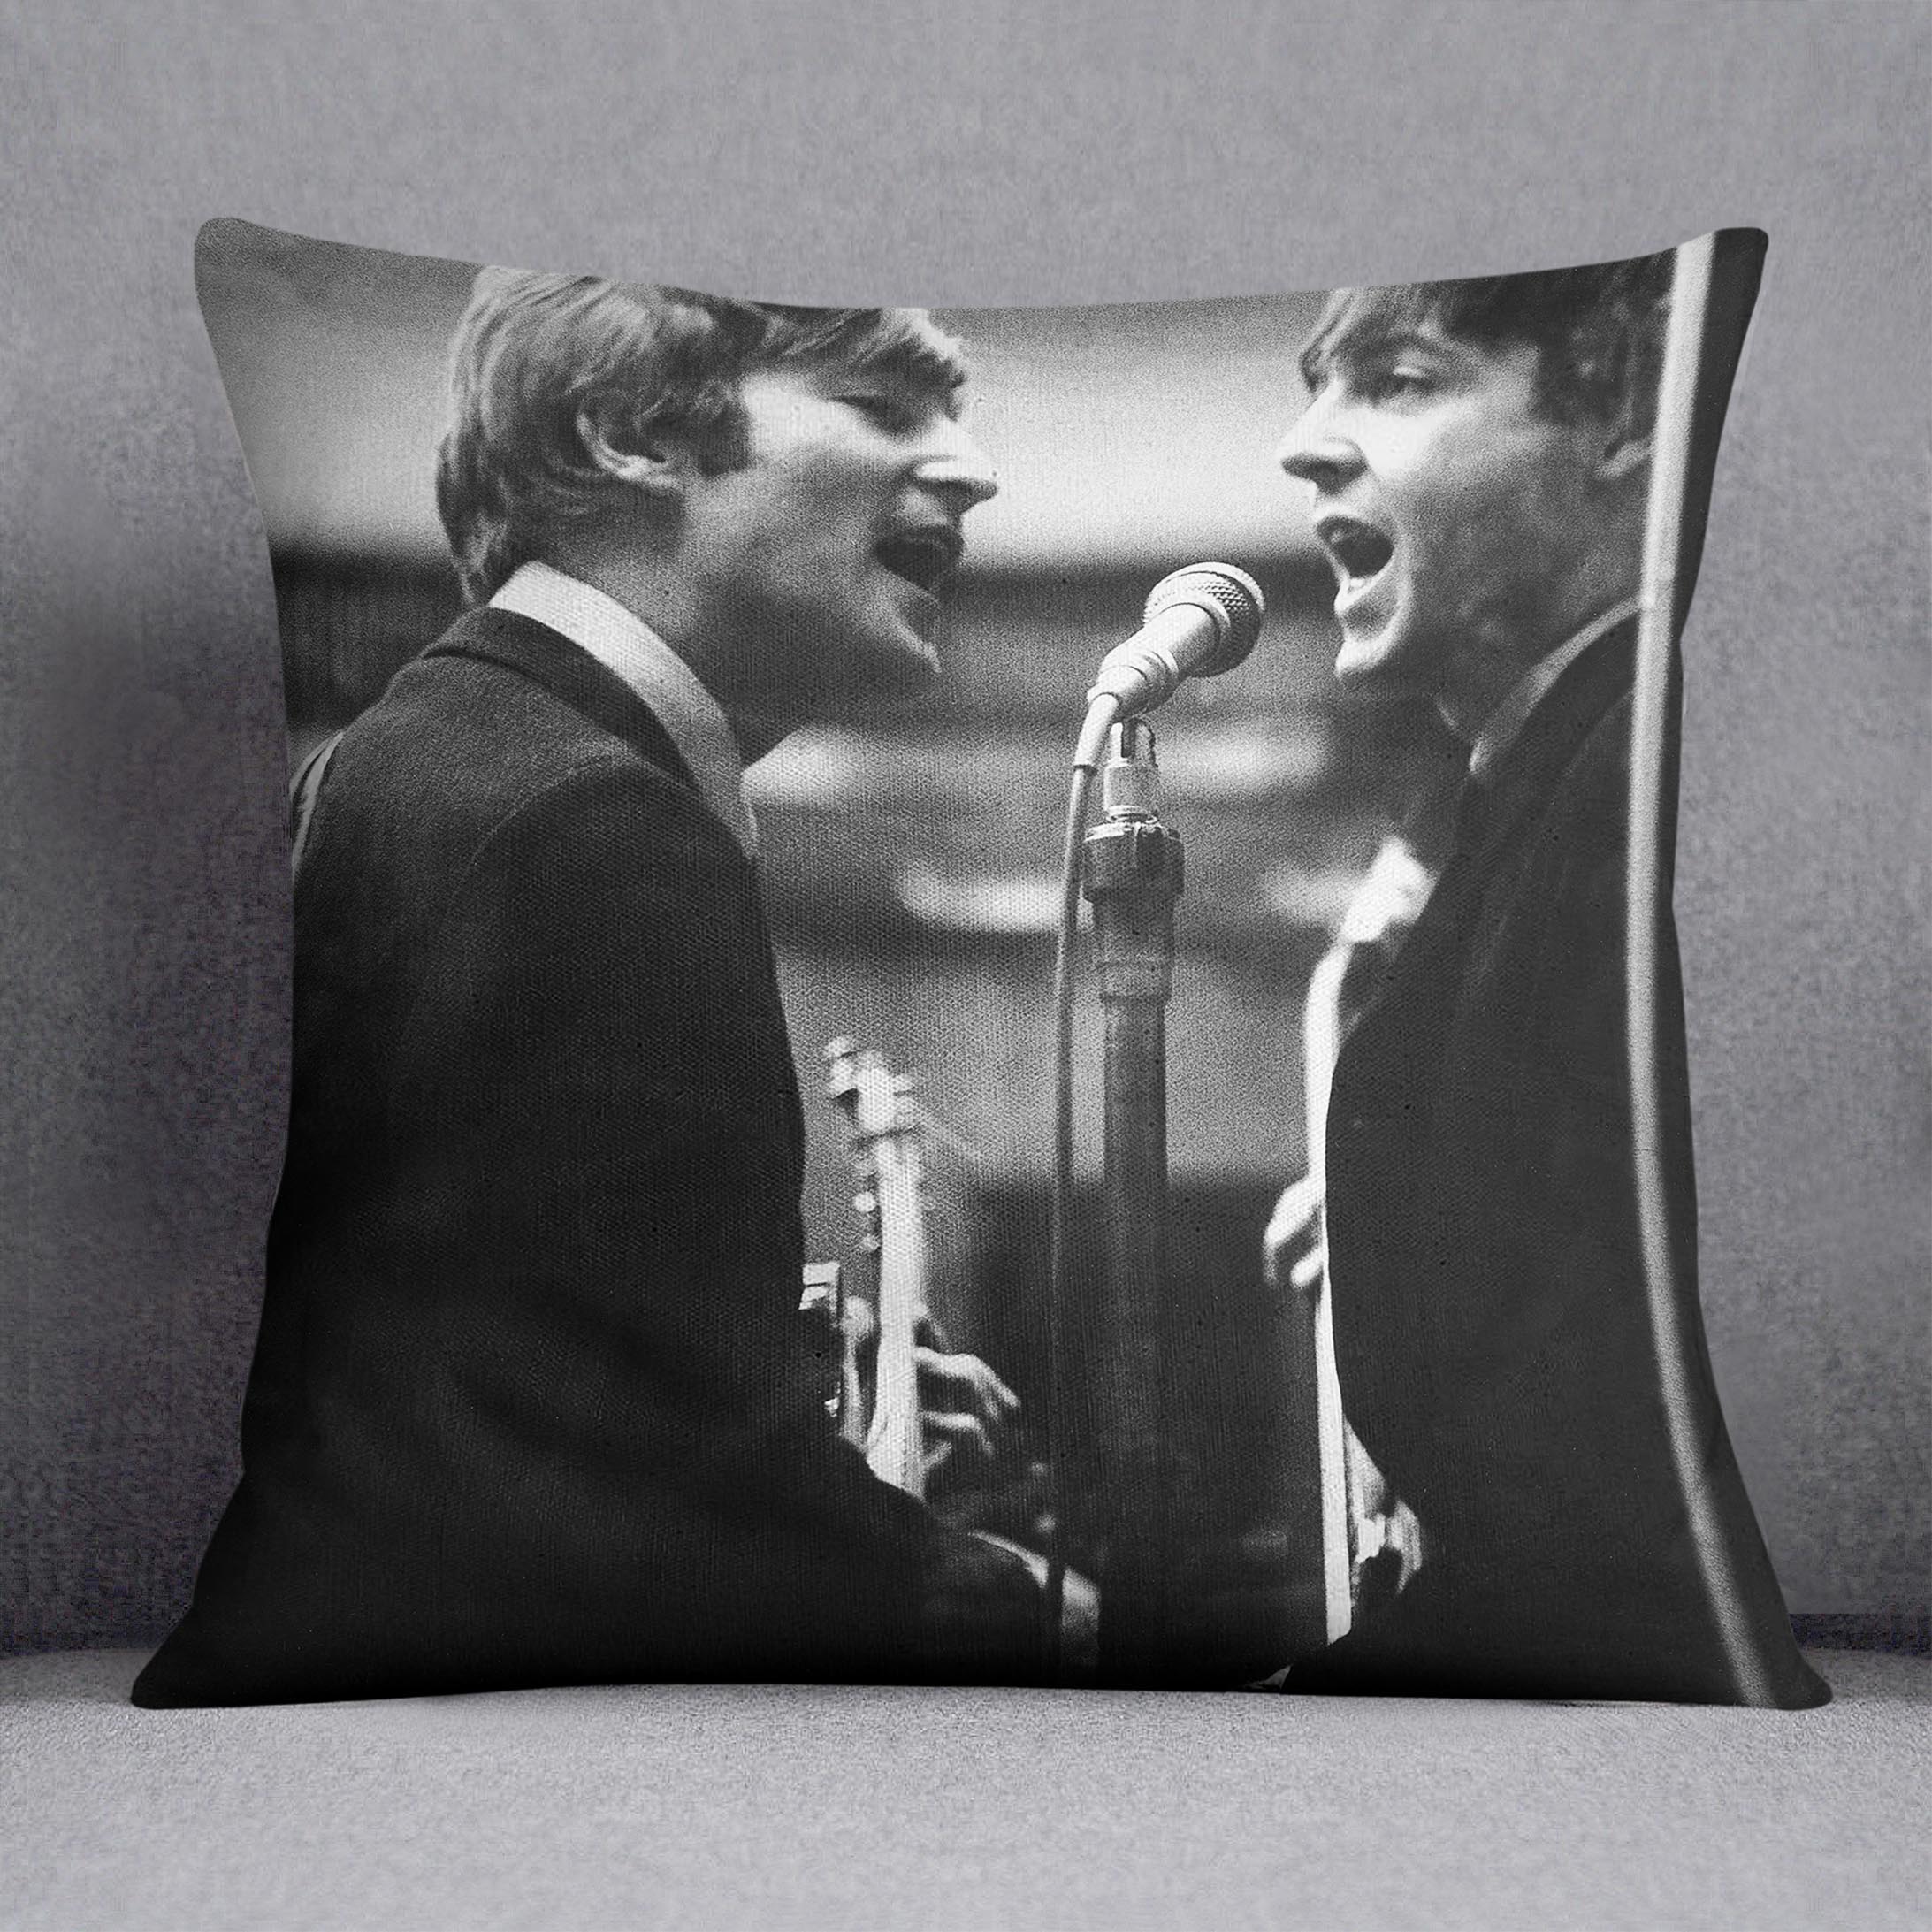 John Lennon and Paul McCartney in a recording studio Cushion